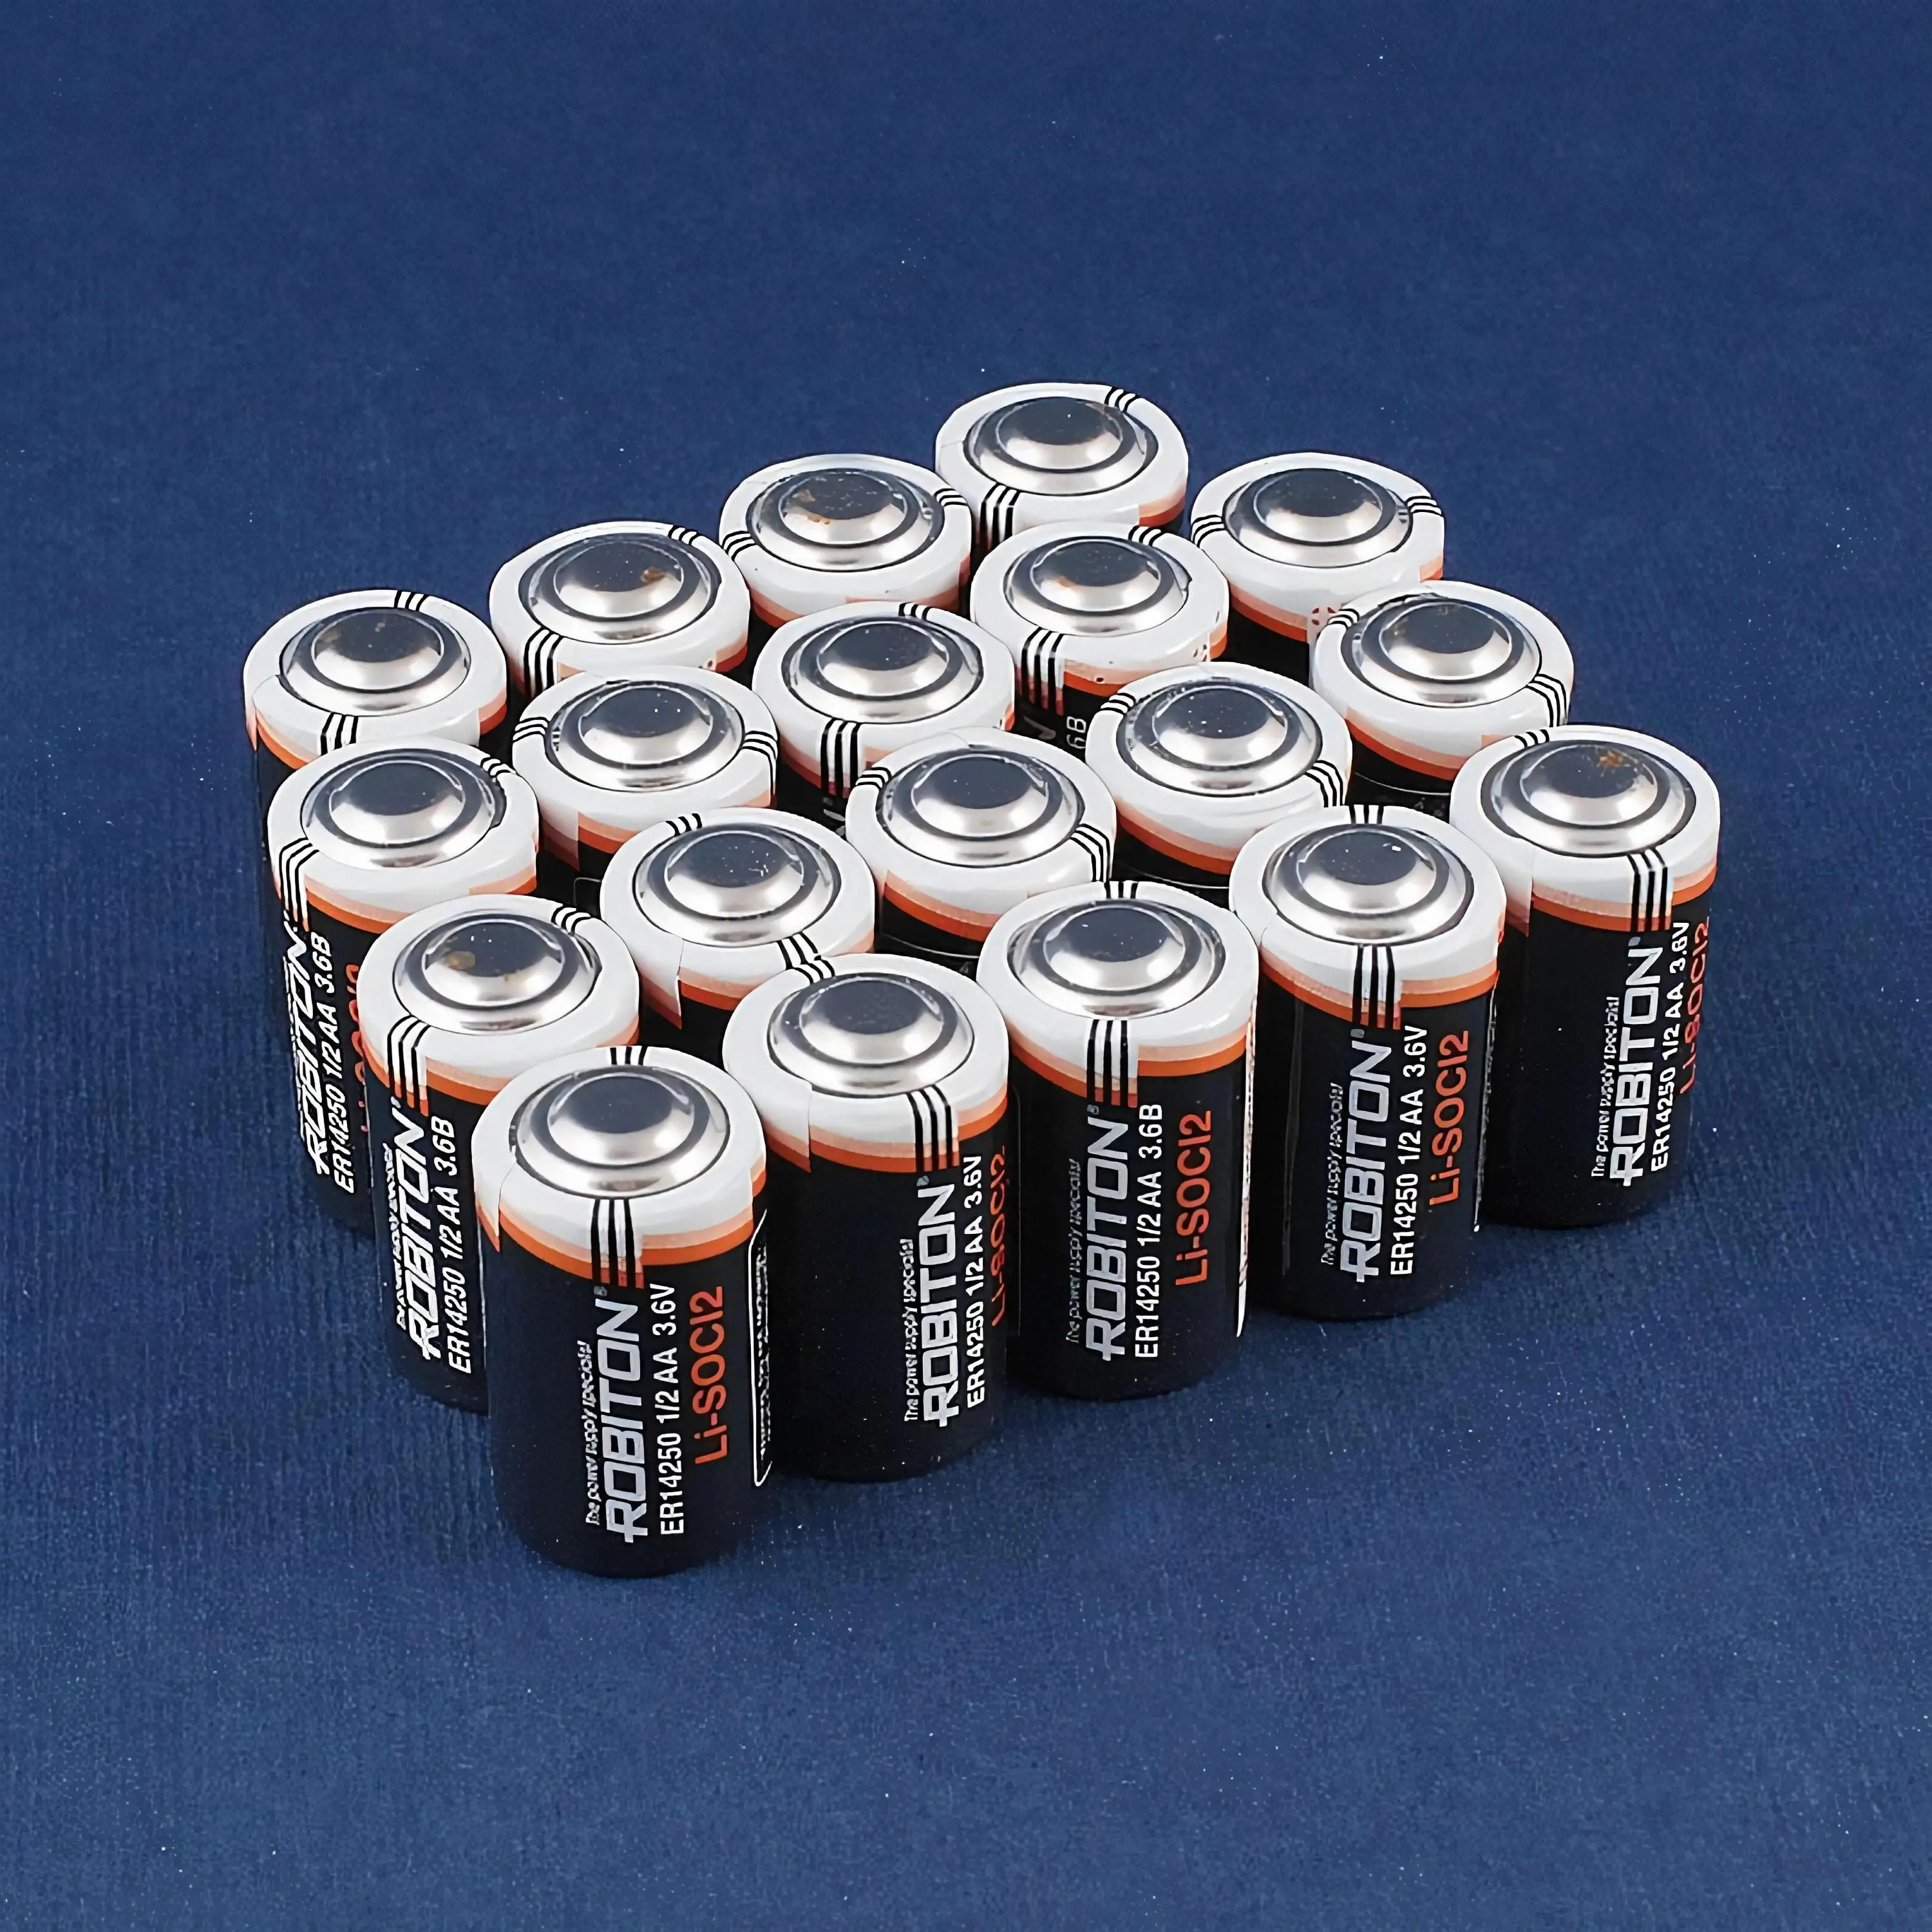 K battery. Батарейка er14250 3.6v Size 1/2 AA. Батарейки 2аа и 3аа. Батарейка 1/2 AA ДНС. 2aa батарейка.